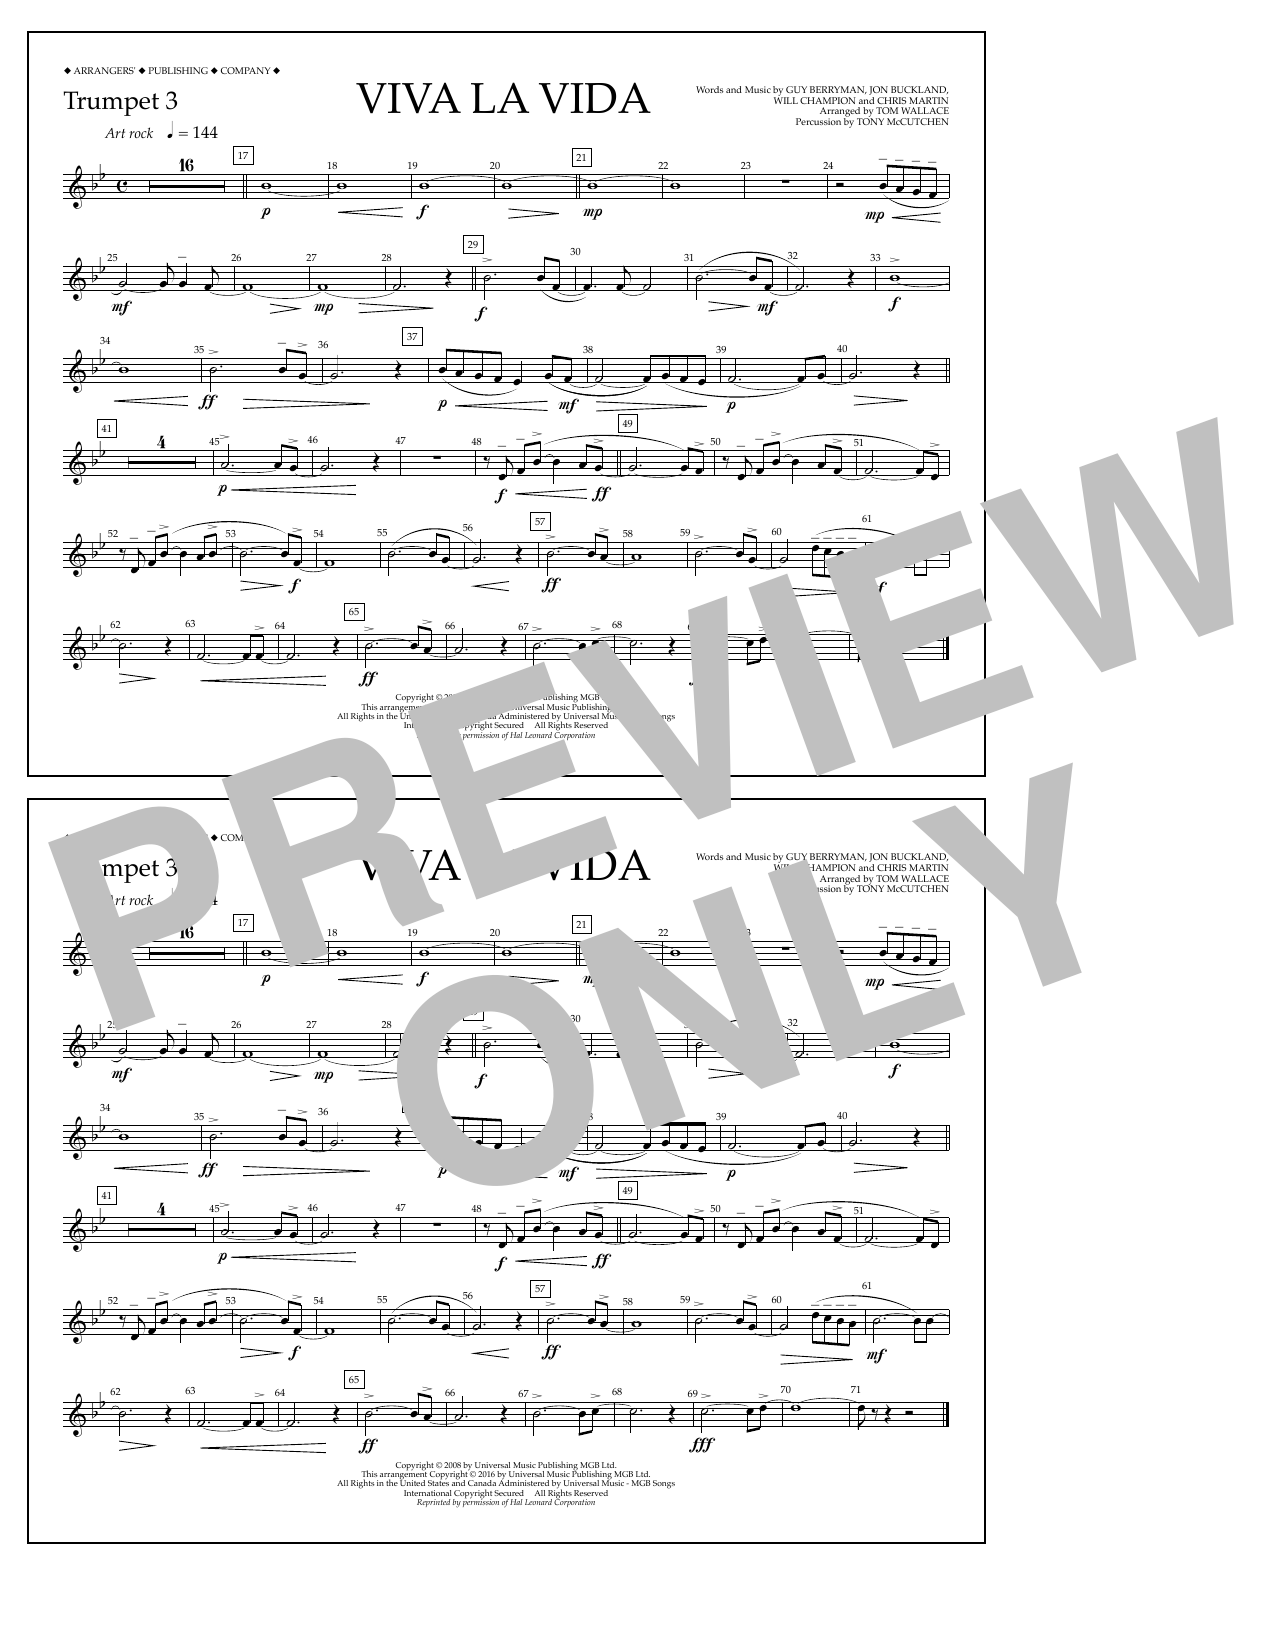 Tom Wallace Viva La Vida - Trumpet 3 Sheet Music Notes & Chords for Marching Band - Download or Print PDF